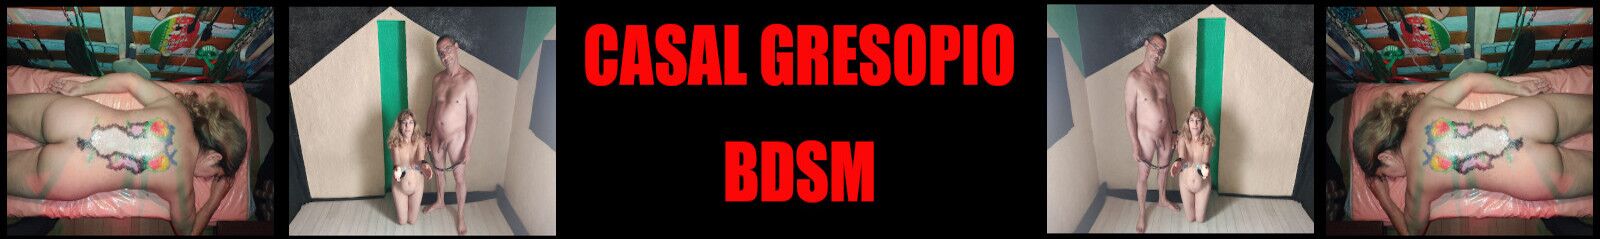 Casal Gresopio BDSM